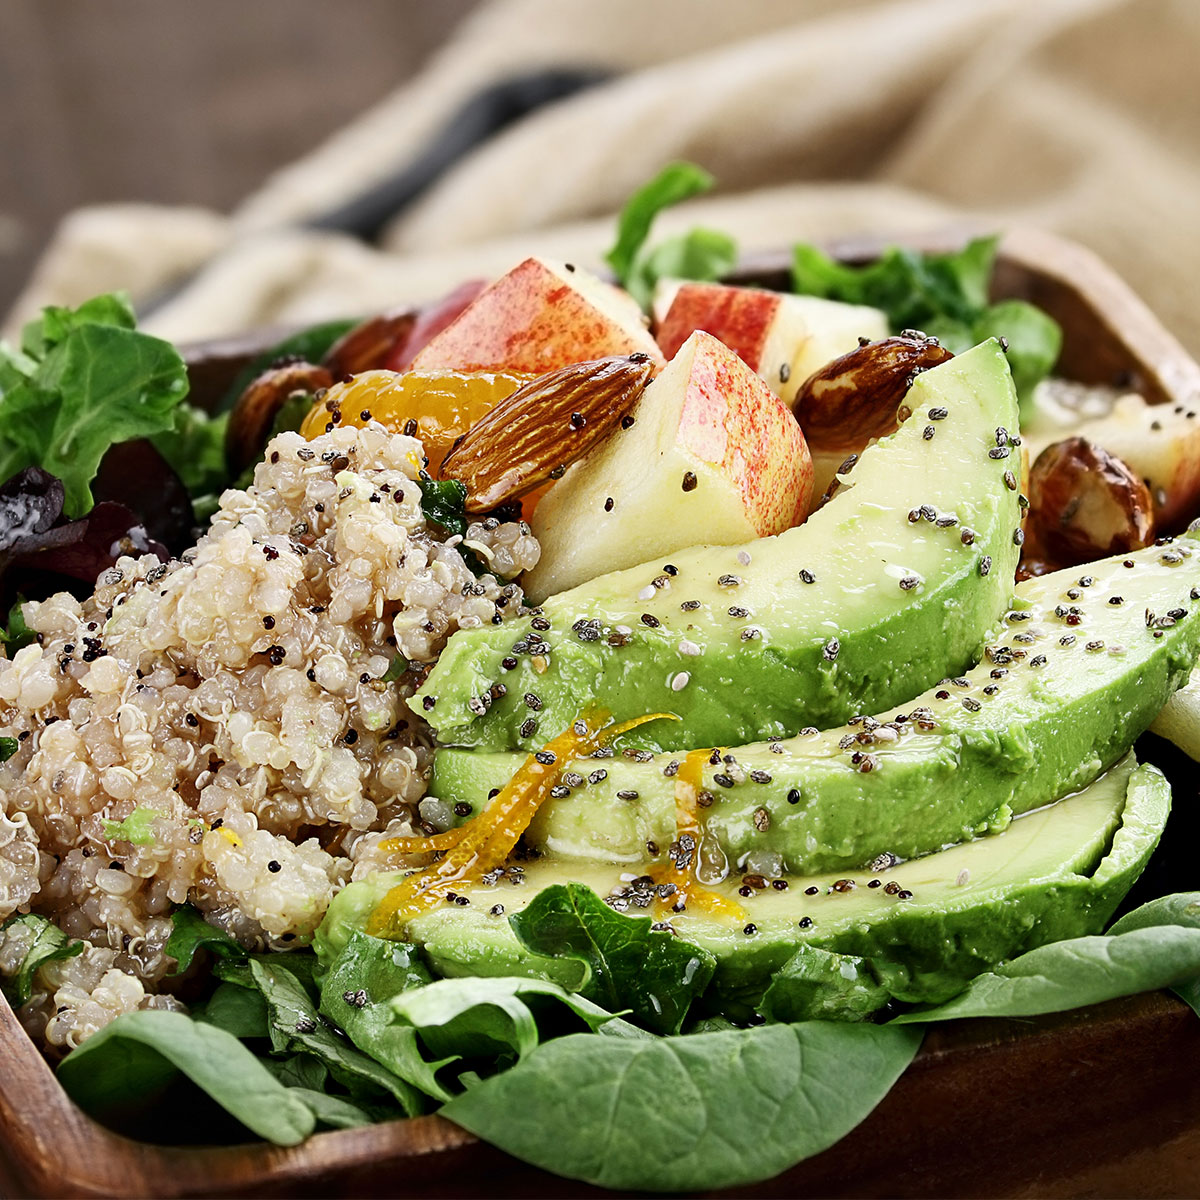 salad with quinoa, apples, avocado, chia seeds